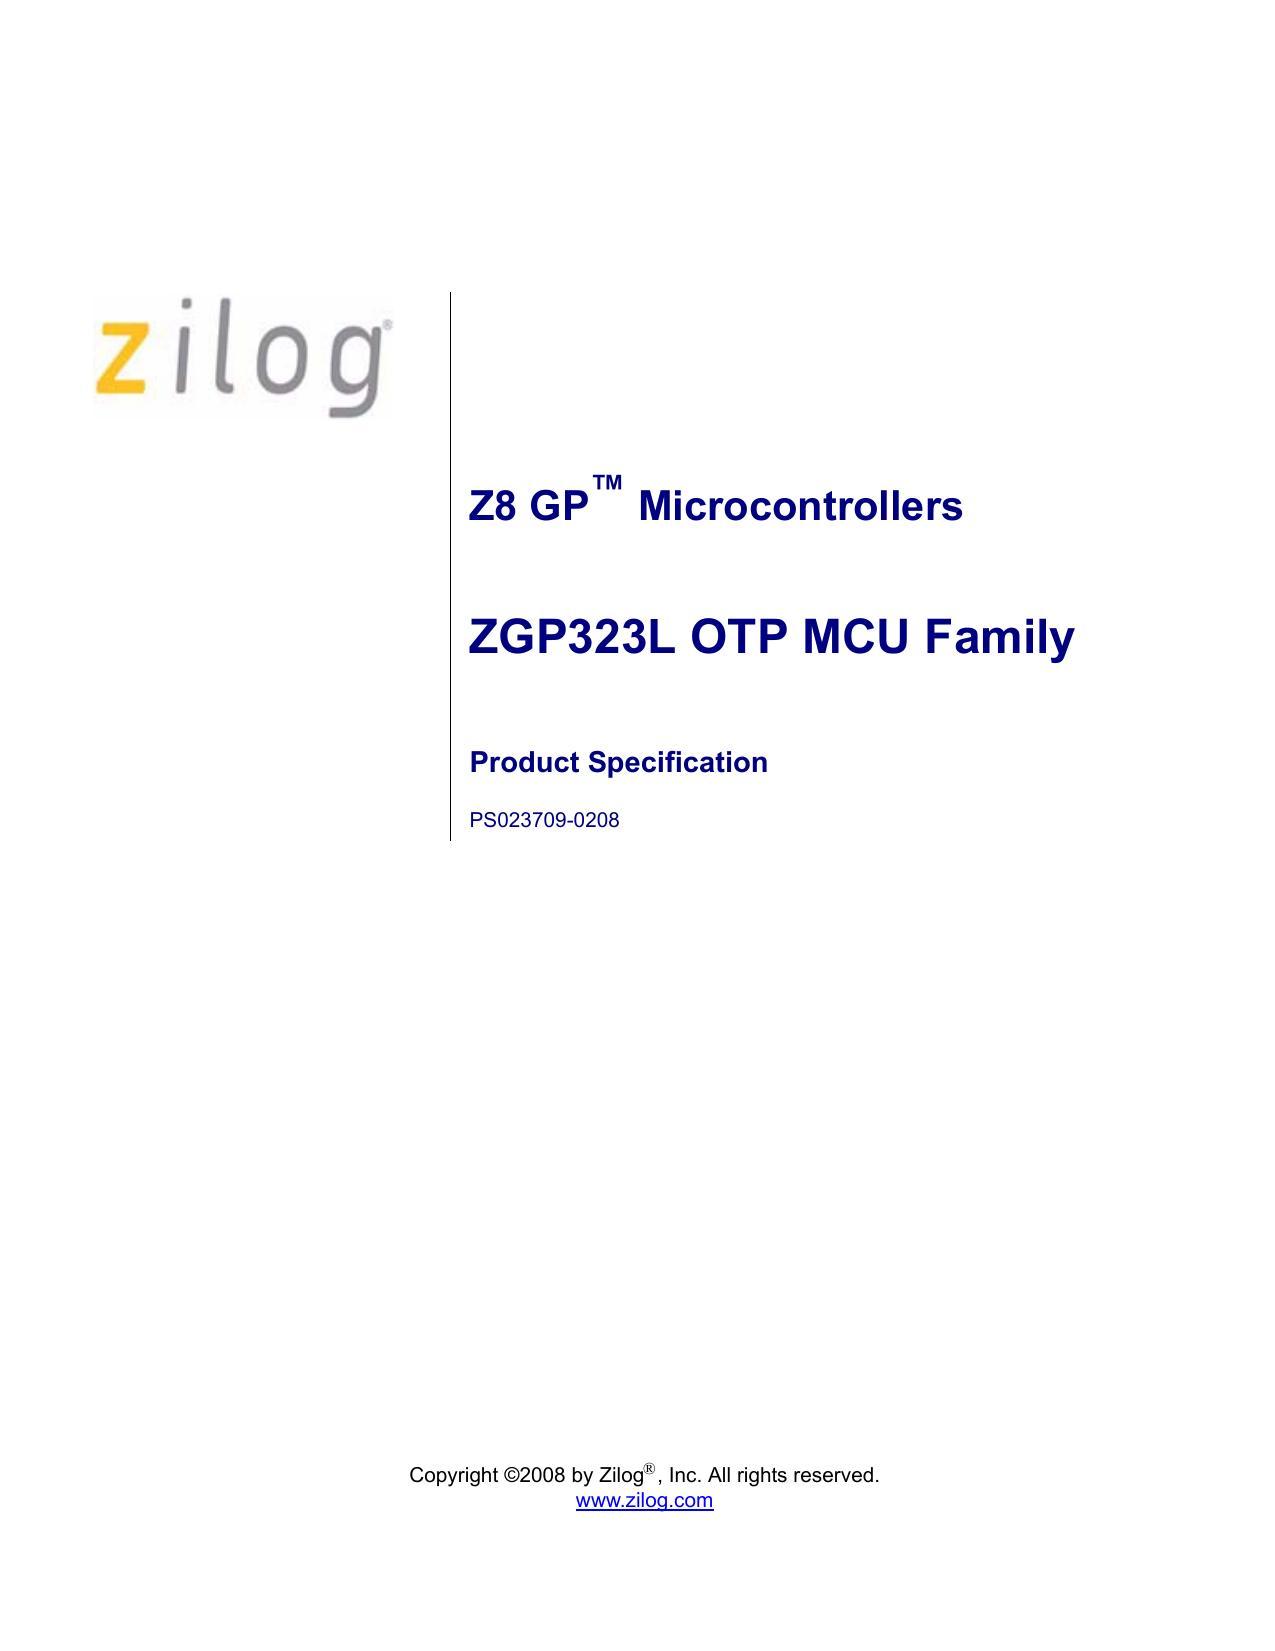 zgp323l-otp-mcu-family-product-specification.pdf